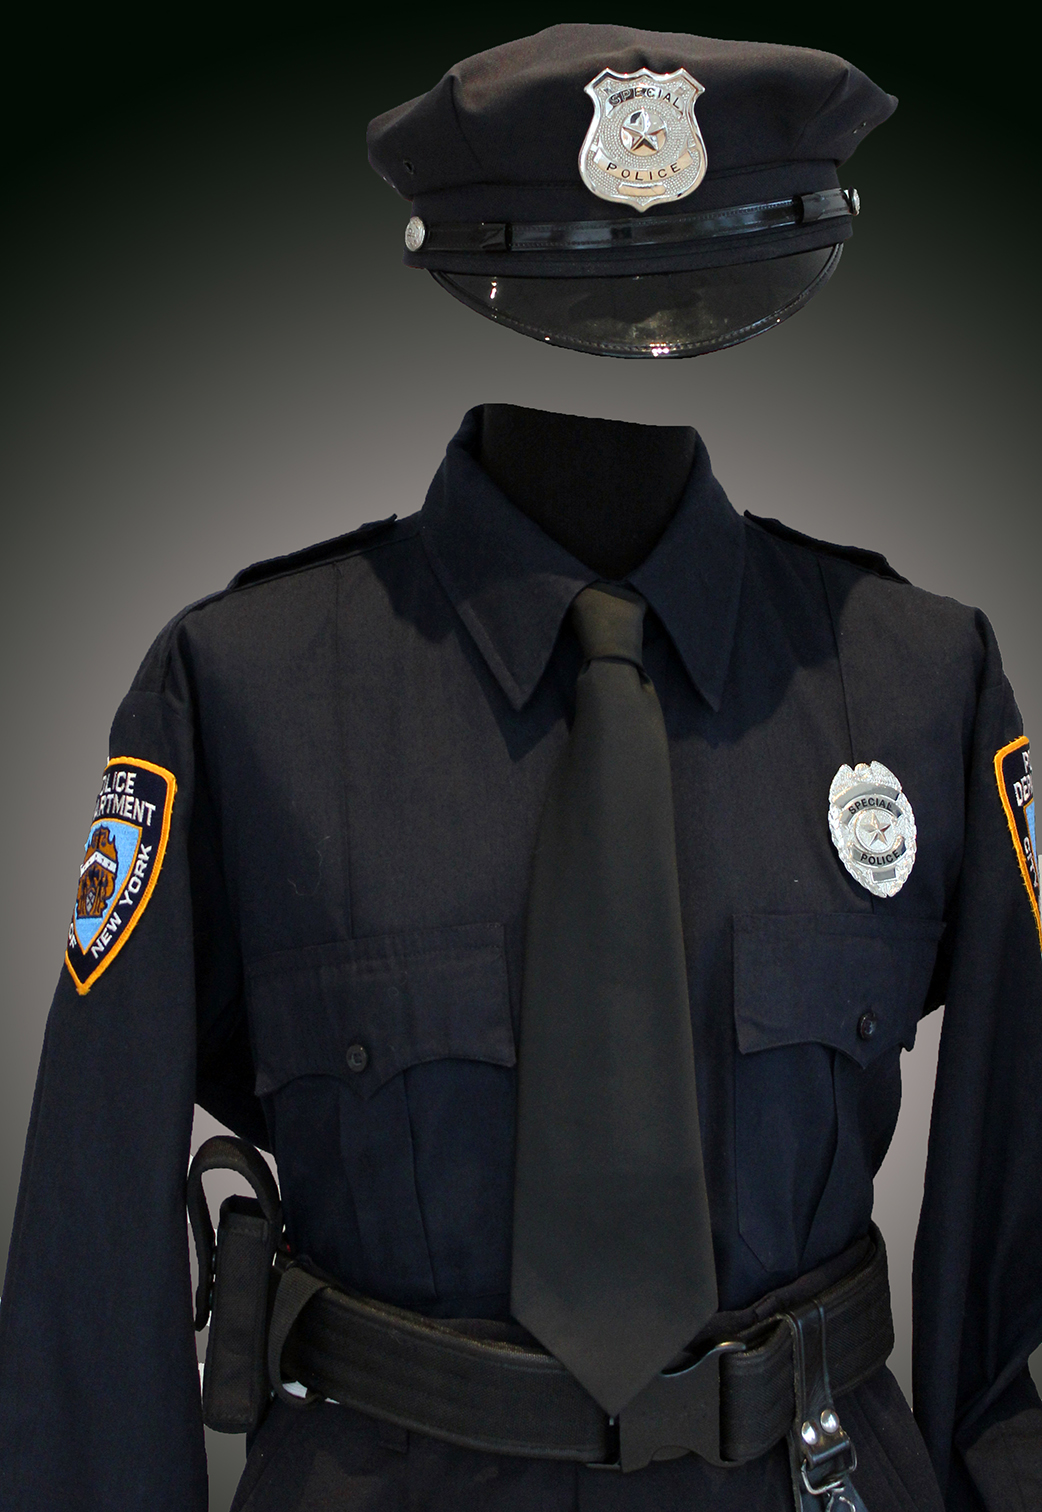 Fivem Police Uniforms